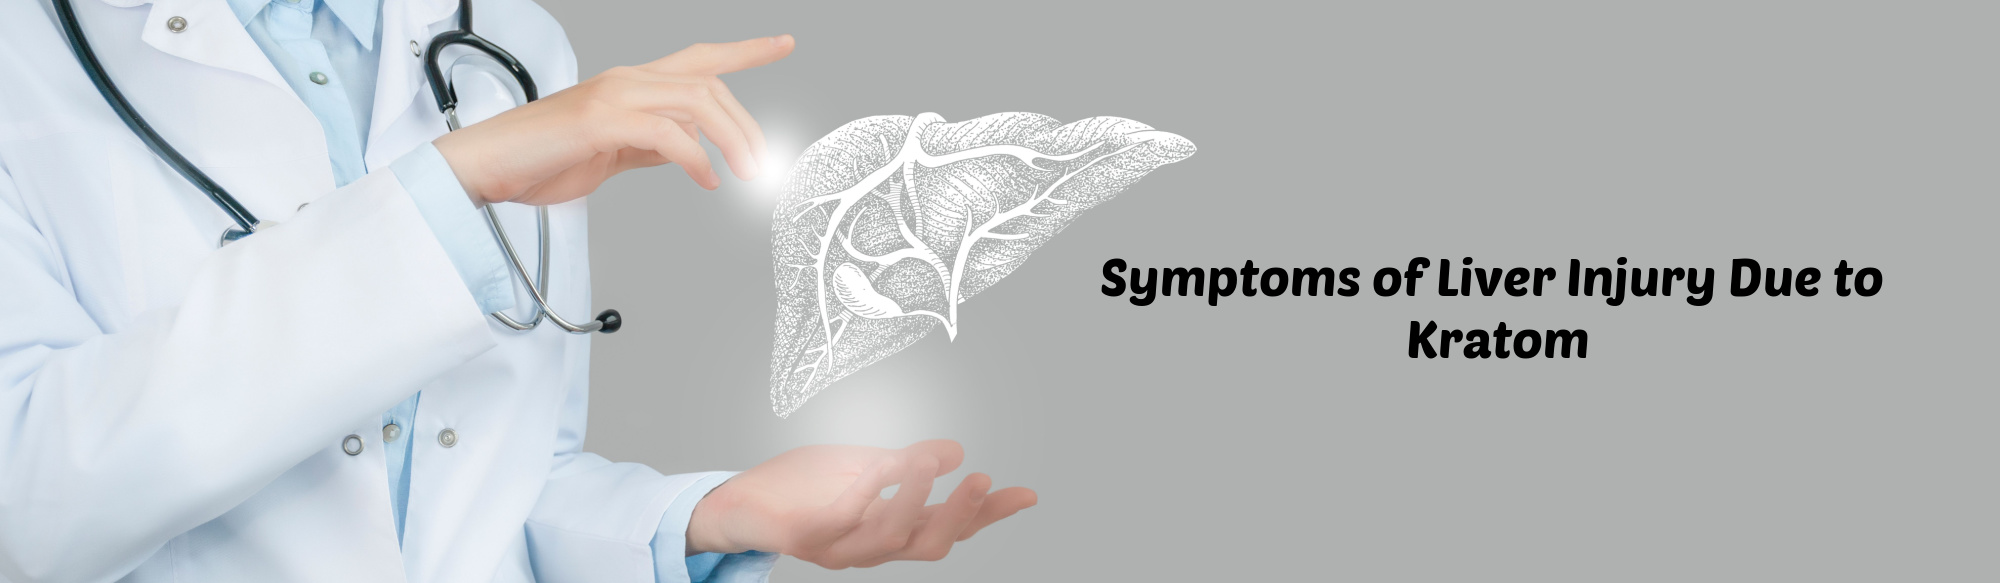 image of symptoms of liver injury due to kratom